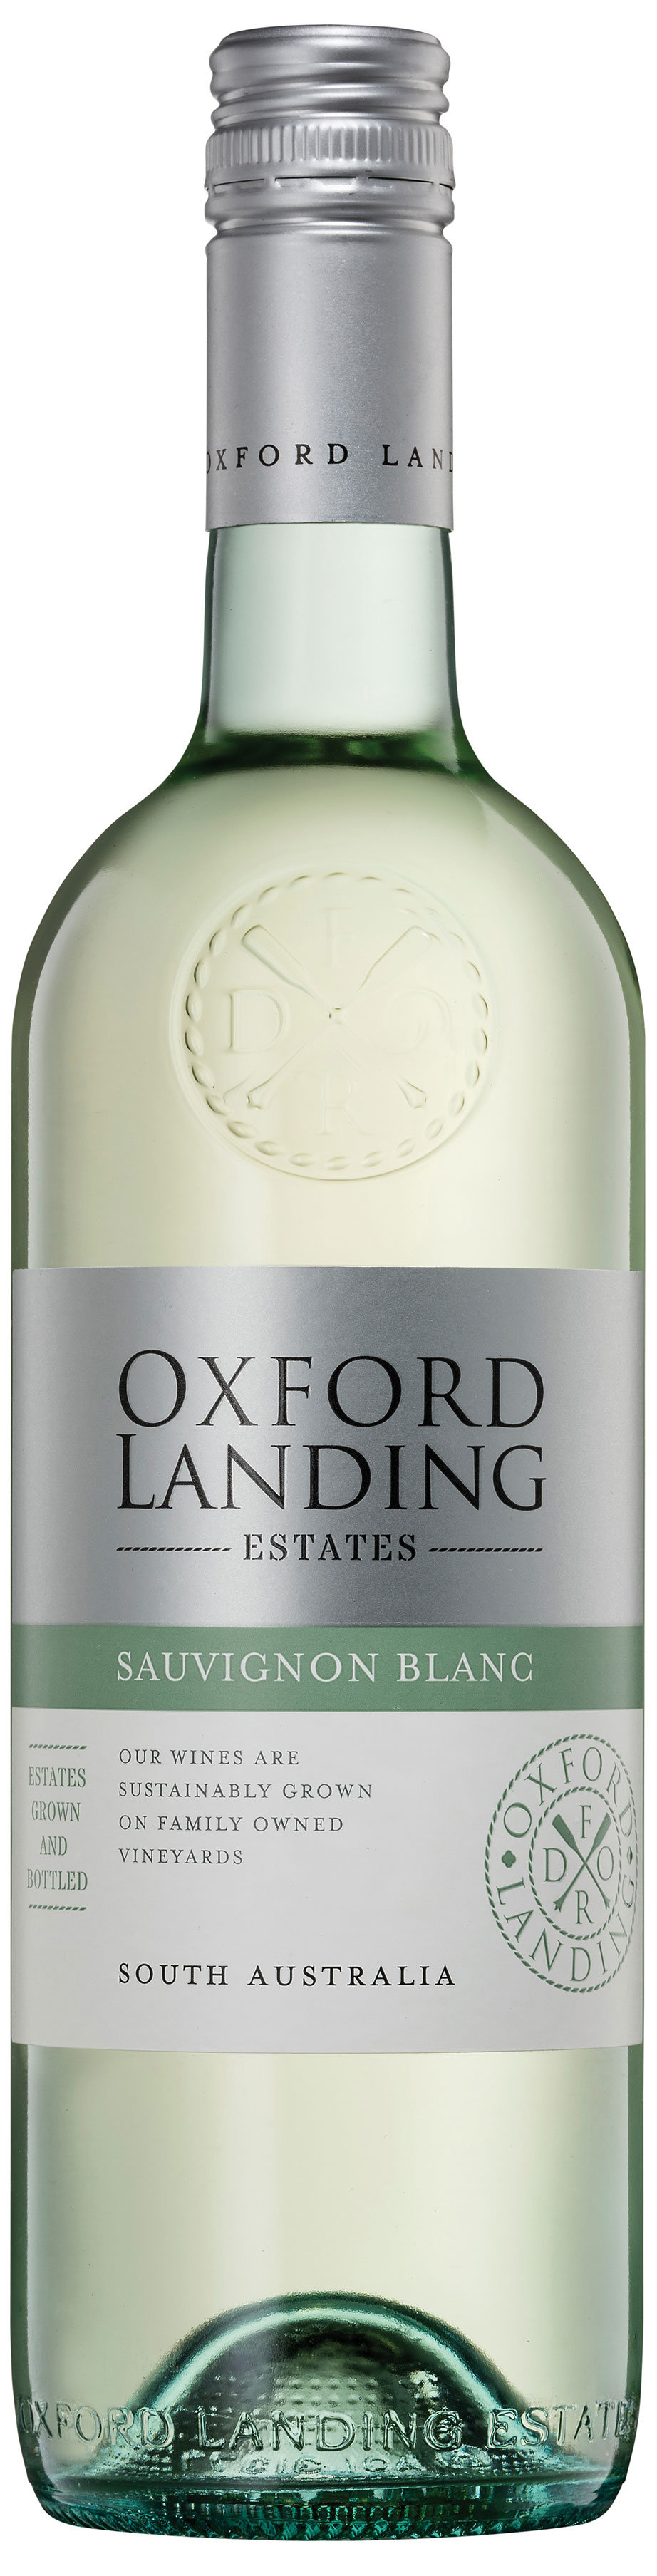 https://vinocorpperu.com/images/vinos/oxfordlanding/oxford_landing_estates_sauvignon_blanc_2020.jpg